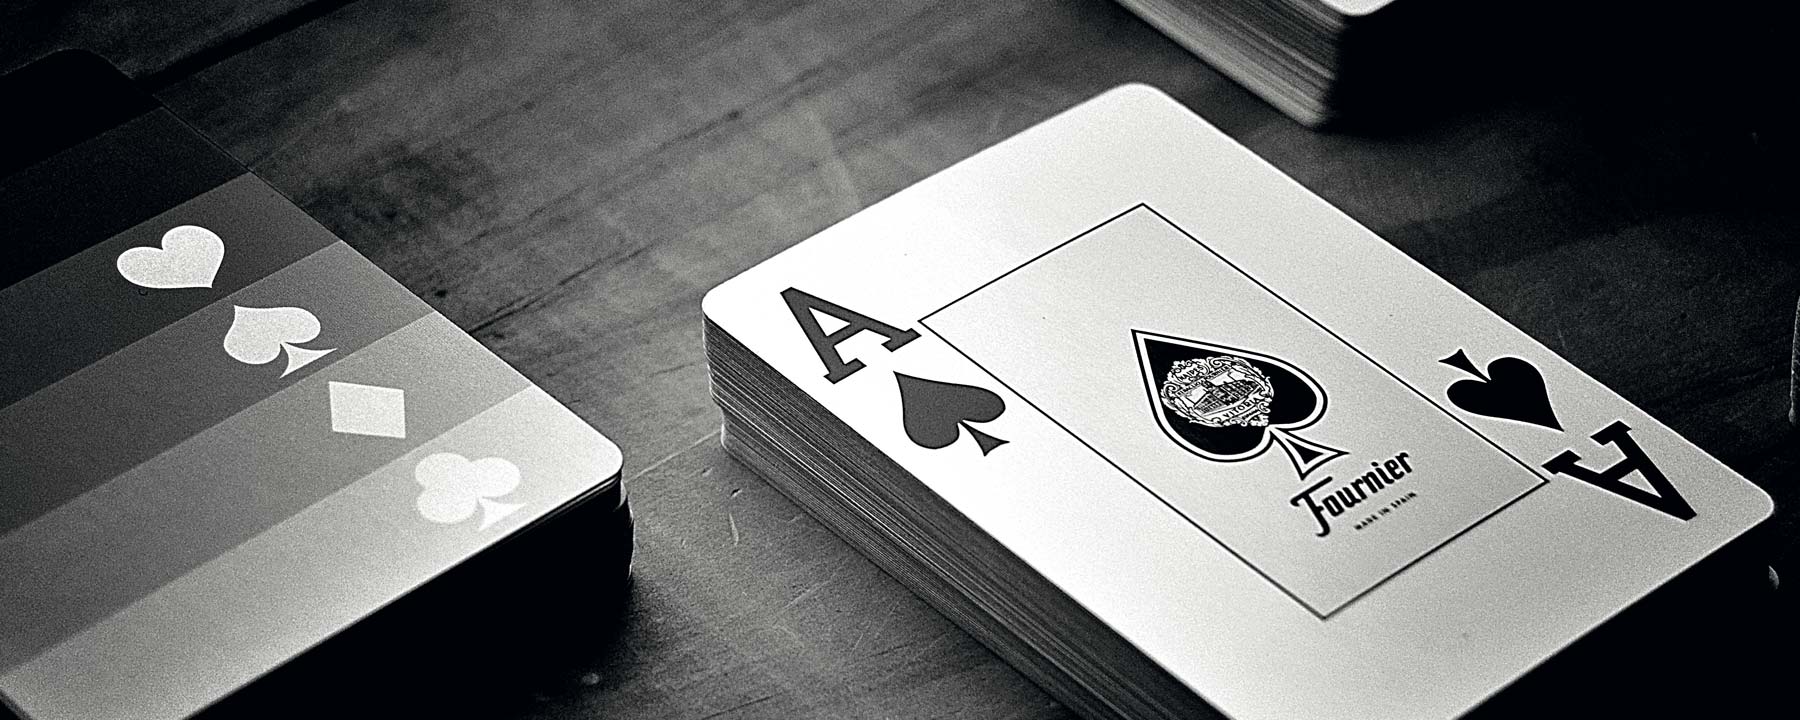 baraja de cartas/naipes poker/bridge-teodomiro - Acheter Jeux de